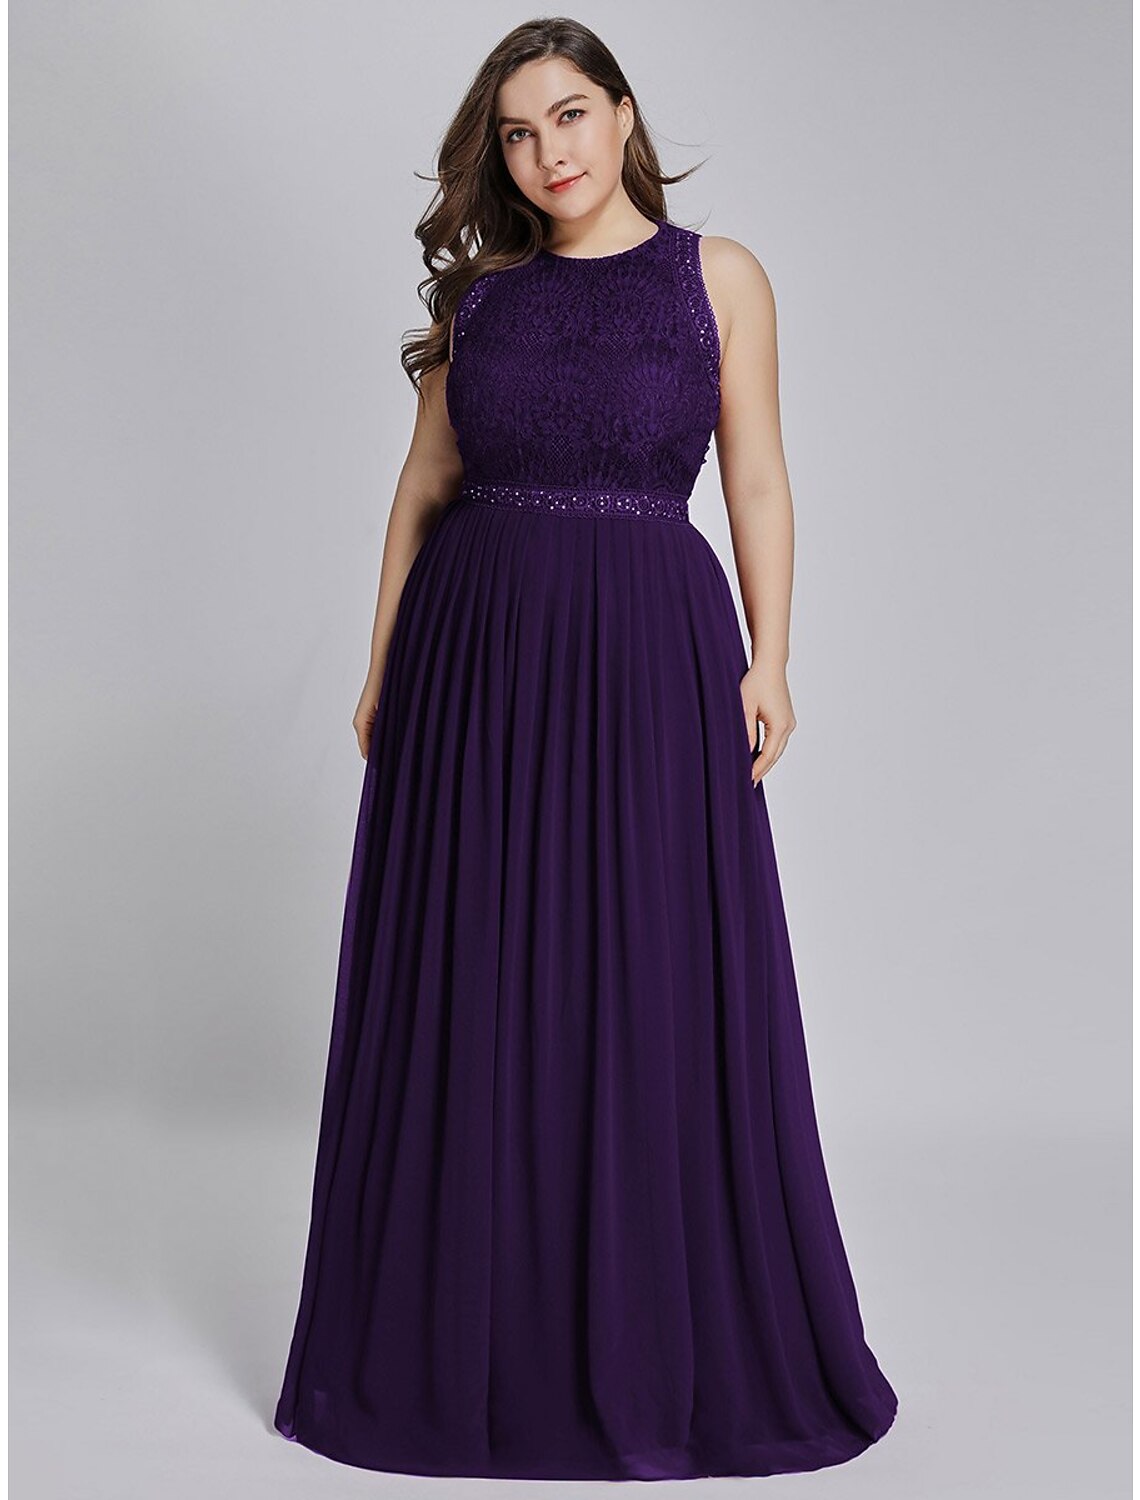 A-Line Prom Dresses Elegant & Luxurious Dress Wedding Guest Floor Length Sleeveless Jewel Neck Chiffon with Crystals